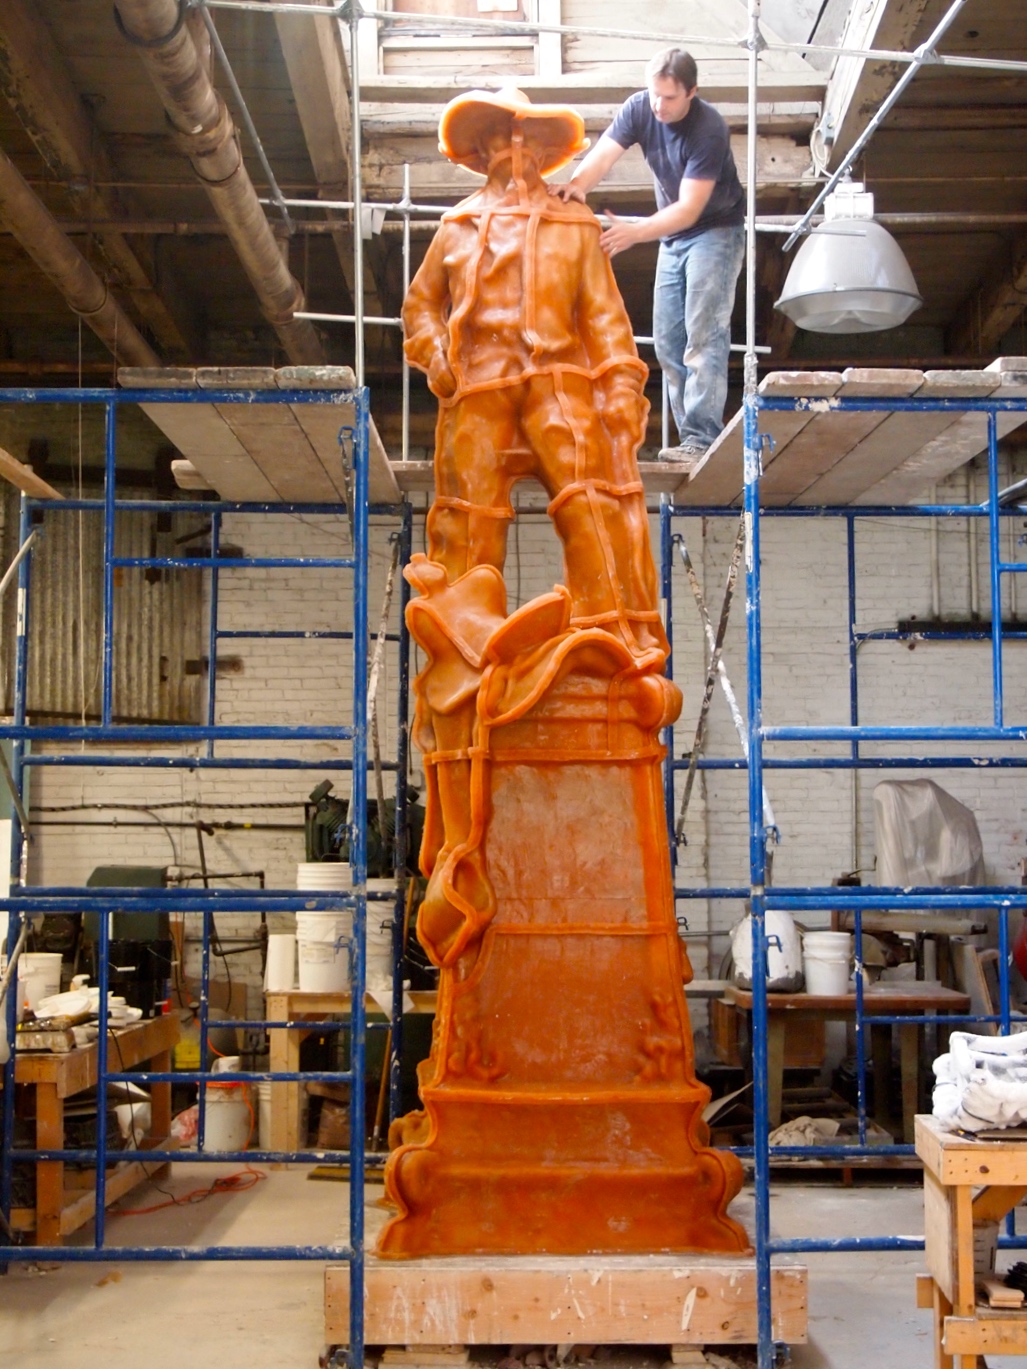 Mold Making and Metal Casting – Stonybrook Metal Arts & Sculpture School